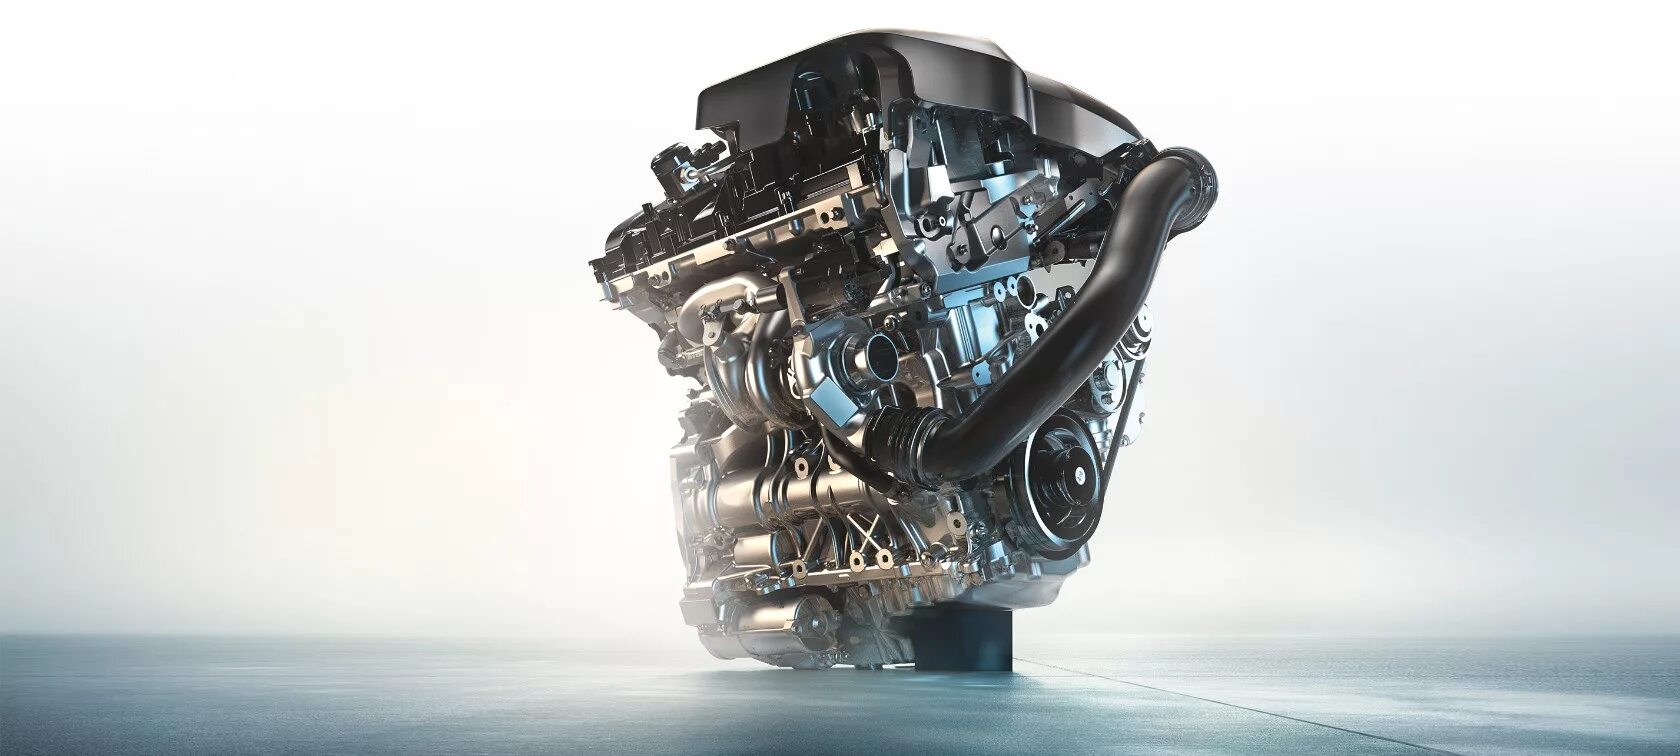 530e BMW двигатель. BMW New engine. 6-Цилиндровый бензиновый двигатель m TWINPOWER Turbo. БМВ м5 е60 мотор. S58 двигатель